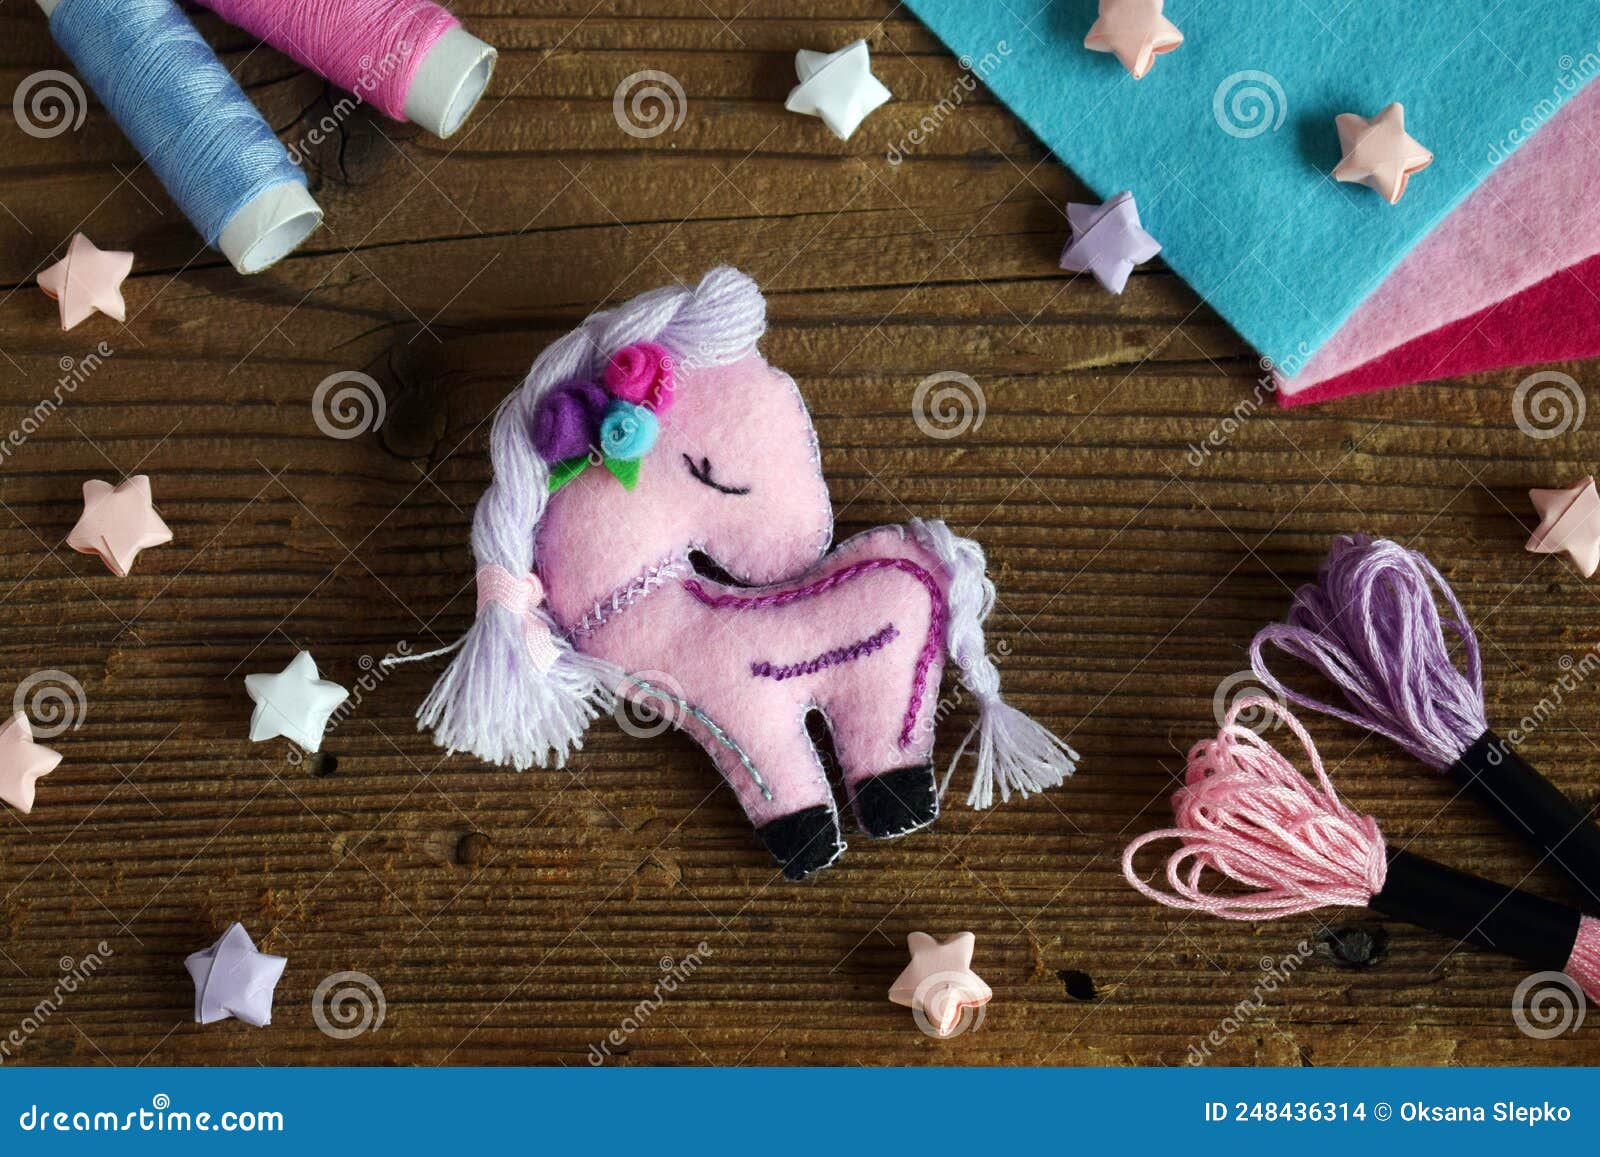 Pink Unicorn Crafts